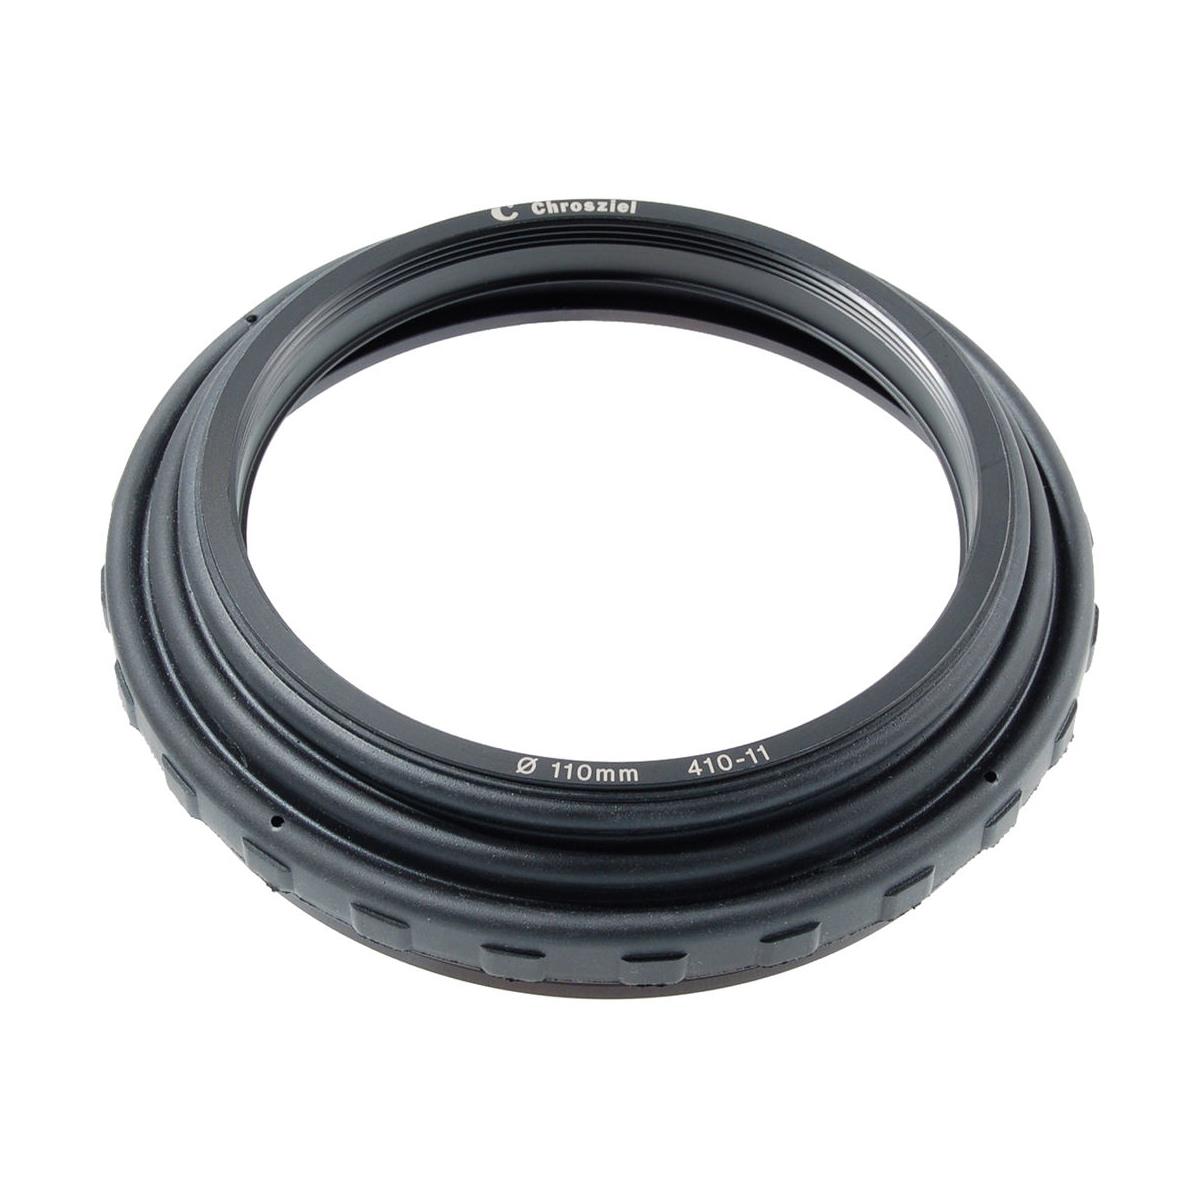 Photos - Teleconverter / Lens Mount Adapter Chrosziel 110mm Insert Ring for Rubber Bellows Retaining Ring C-410-11-01